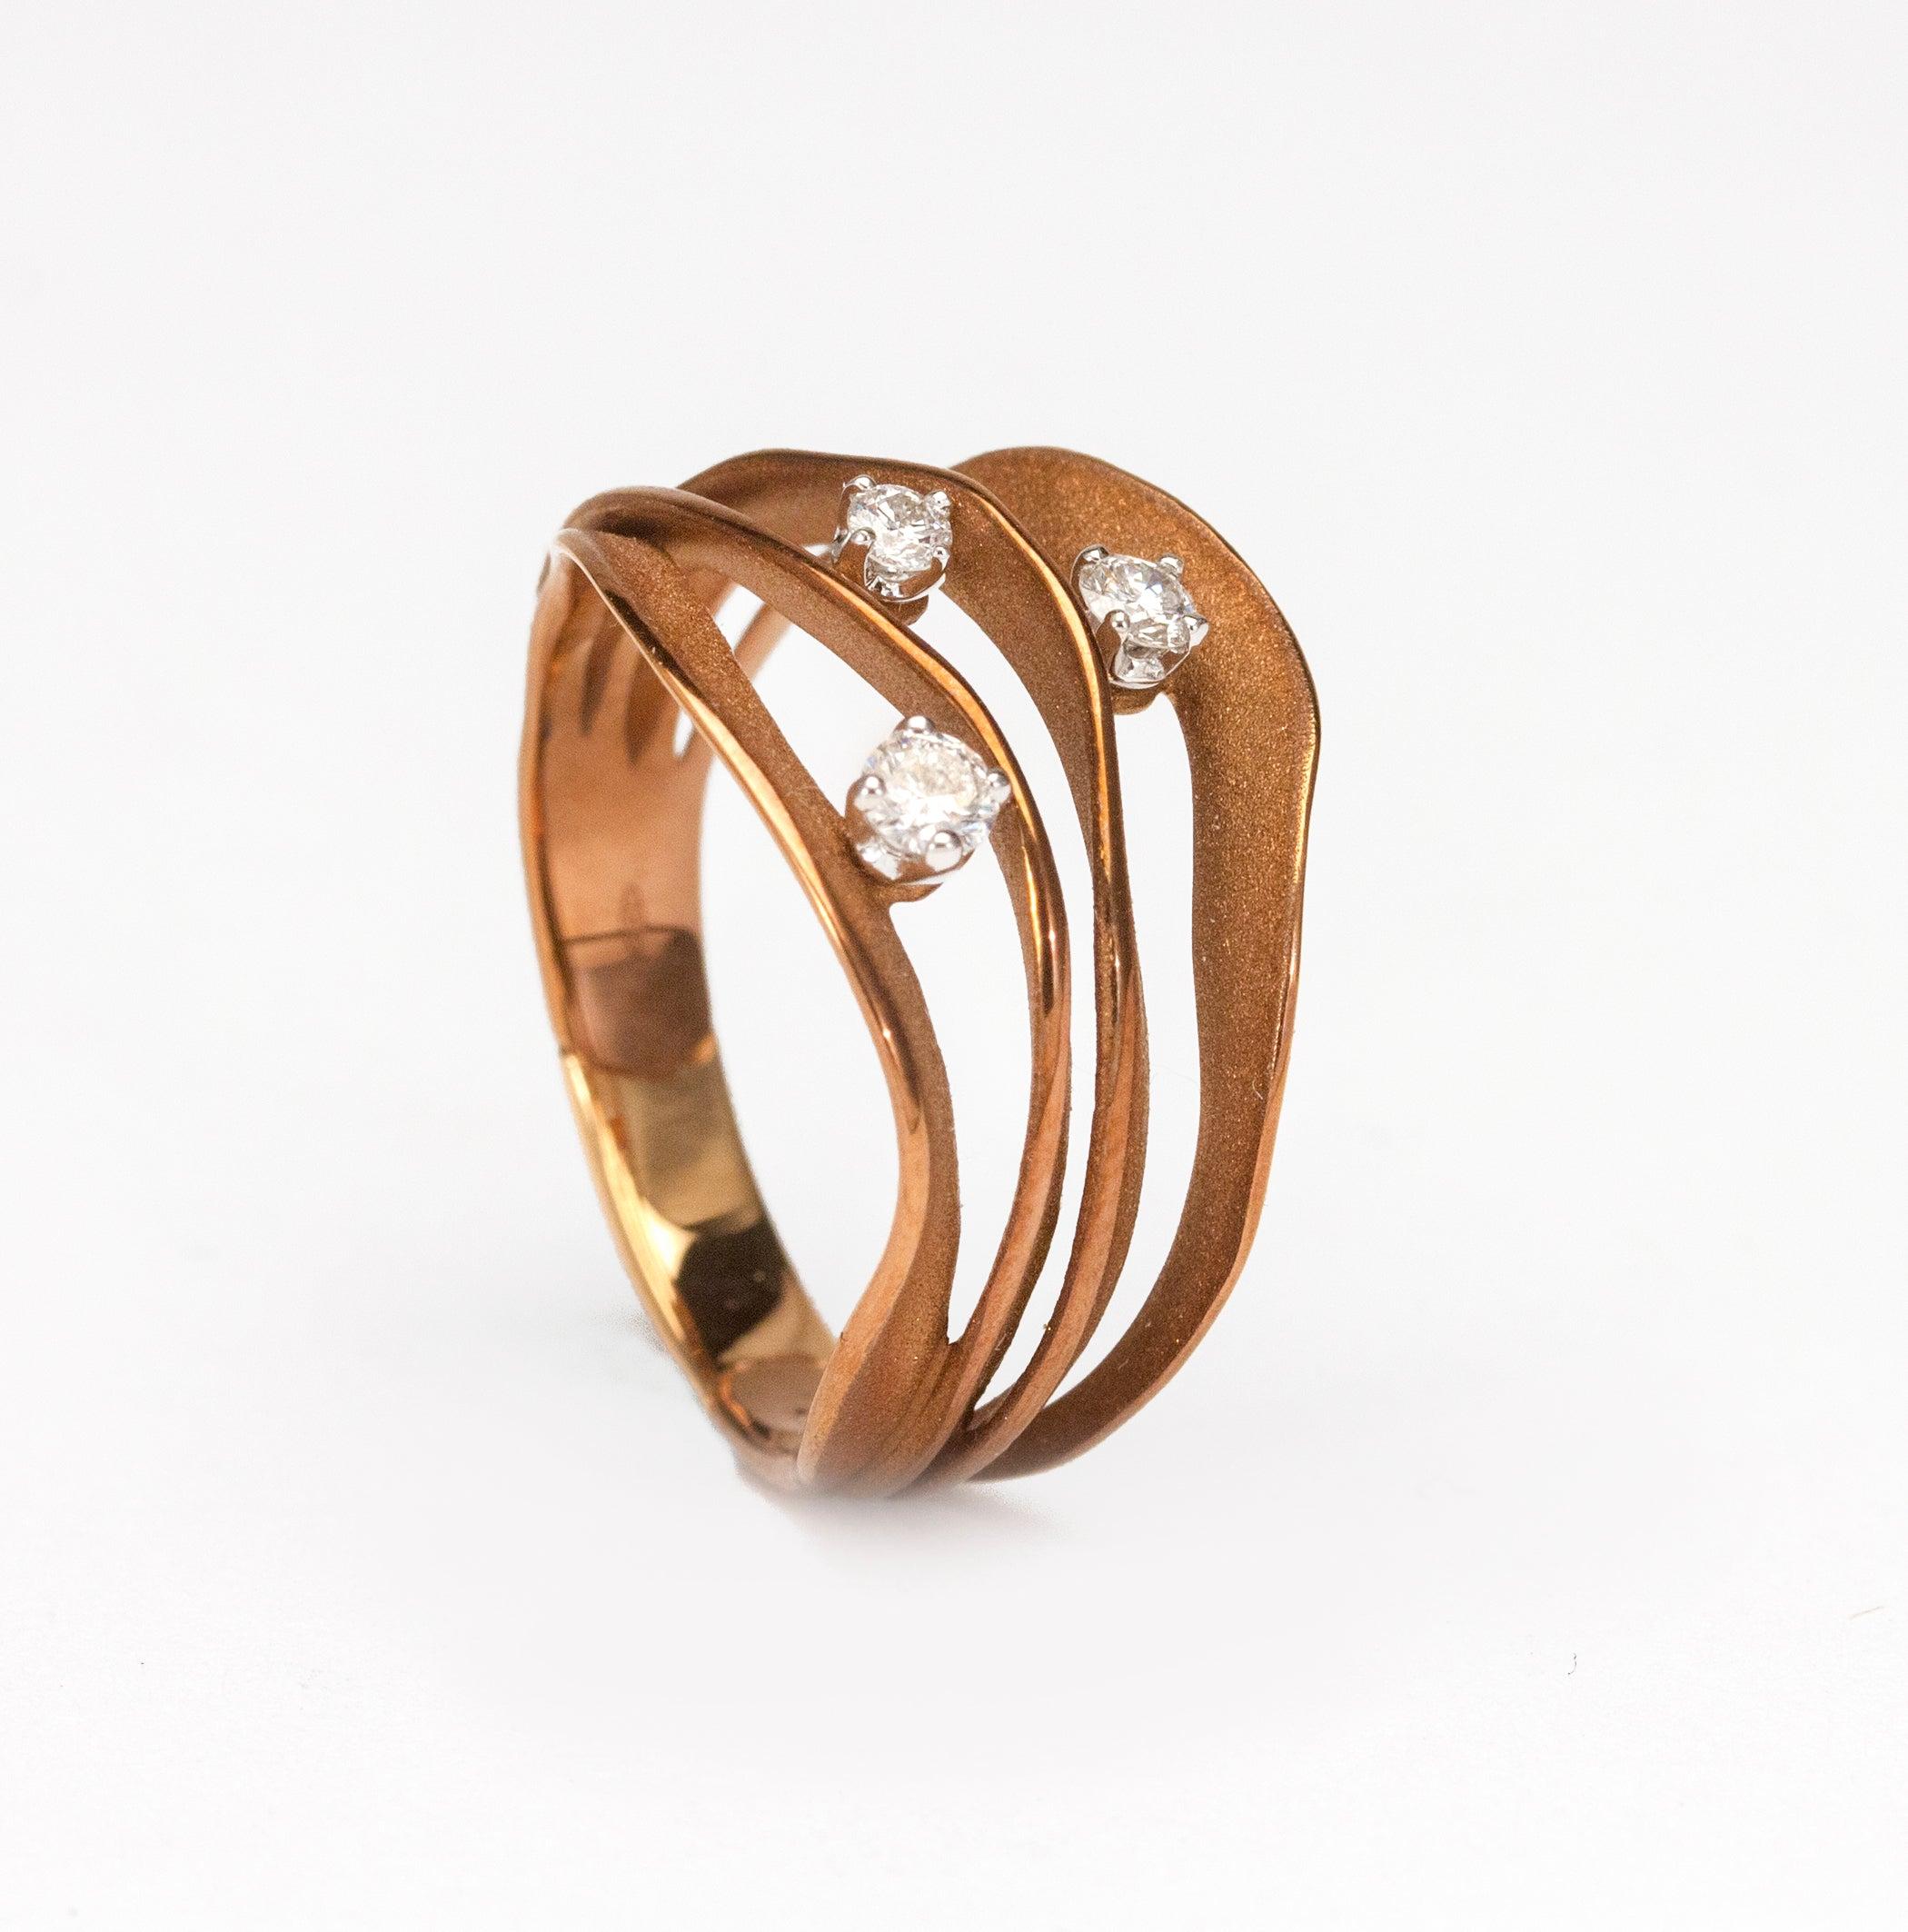 Im Angebot: Annamaria Cammilli „Dune Royal“ Ring mit Diamanten aus 18 Karat braunem Schokoladengold () 4